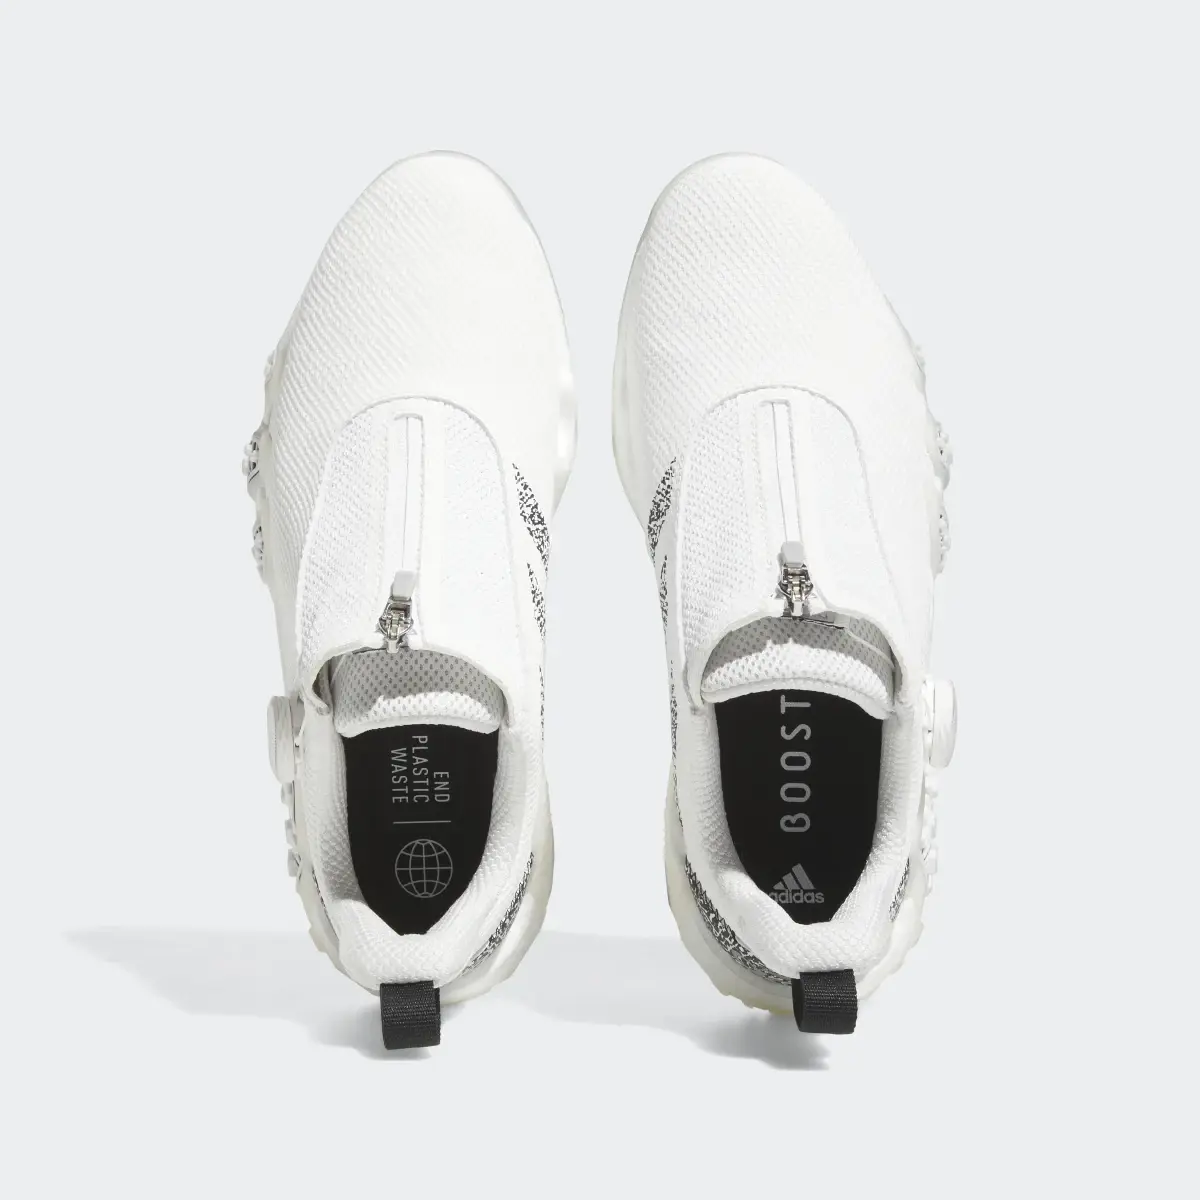 Adidas Codechaos 22 BOA Spikeless Golf Shoes. 3